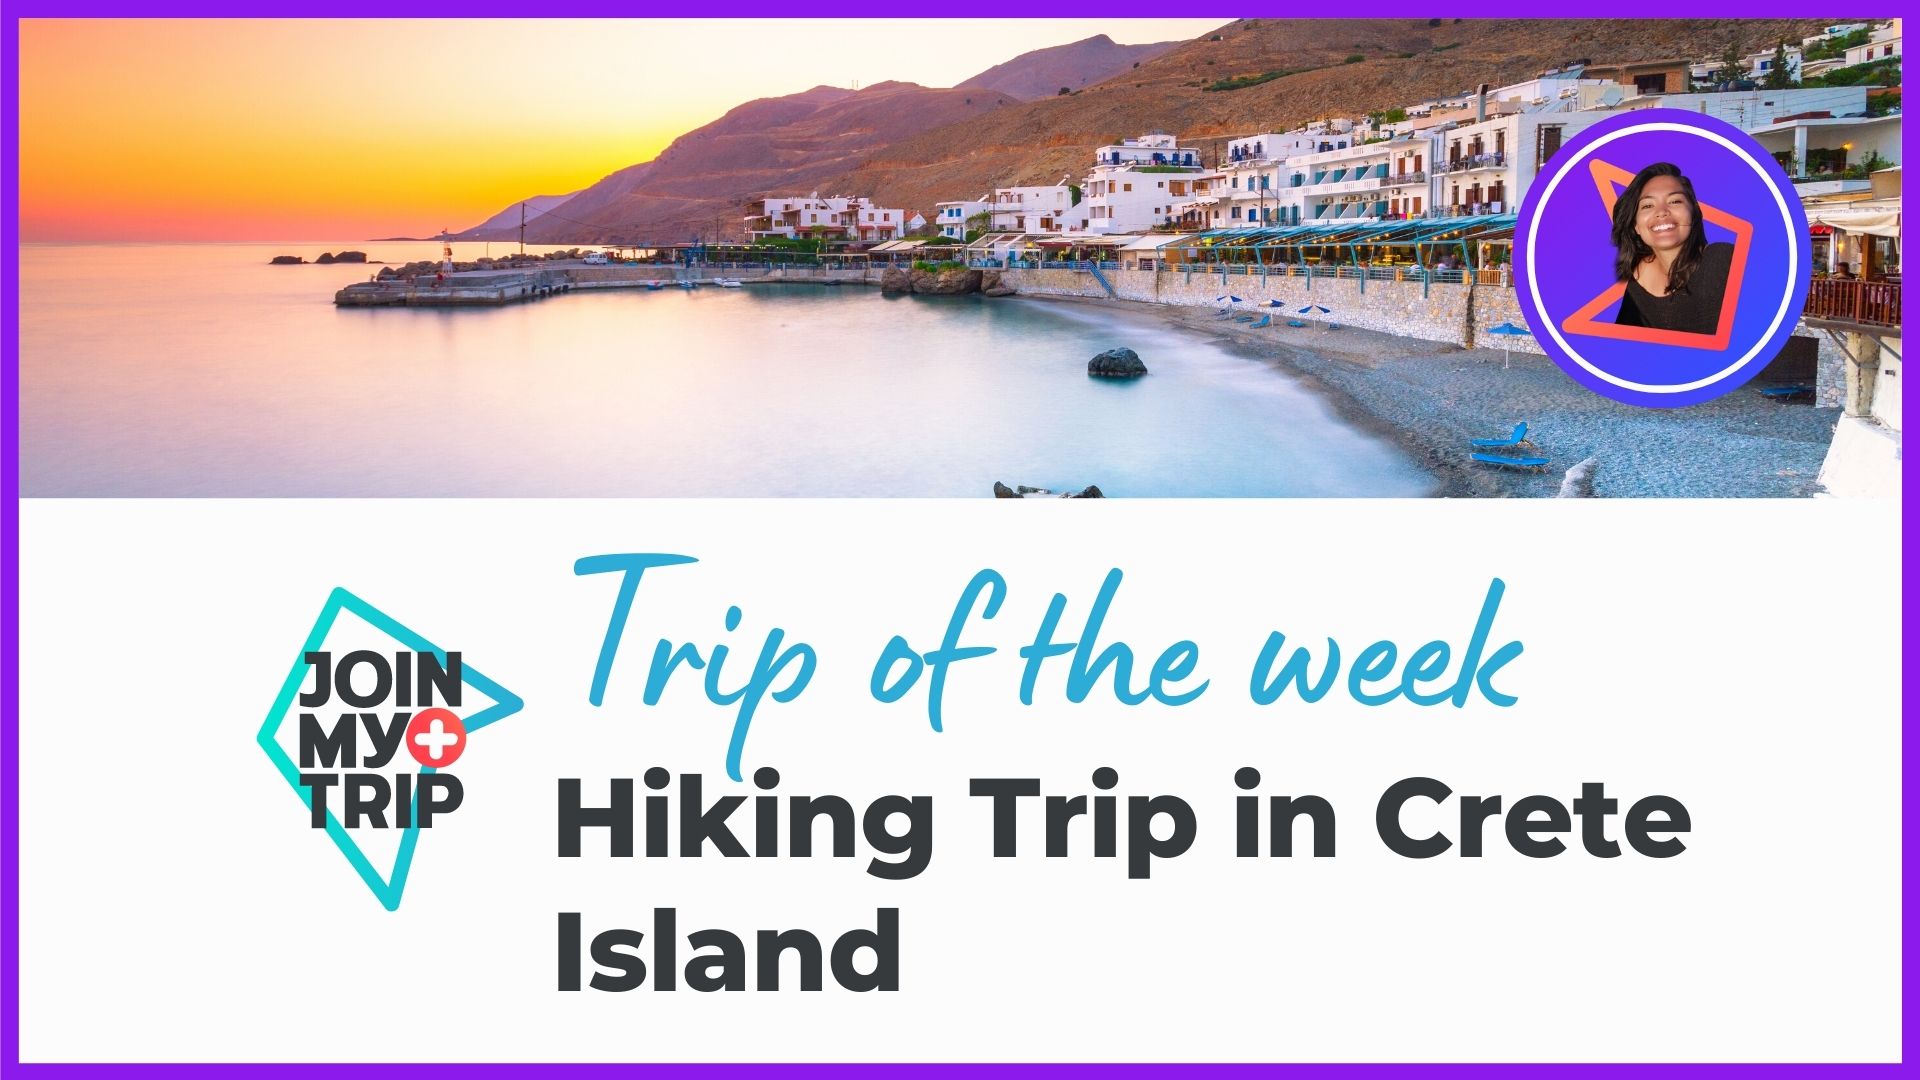 Hiking Trip in Crete Island | Trip of the Week